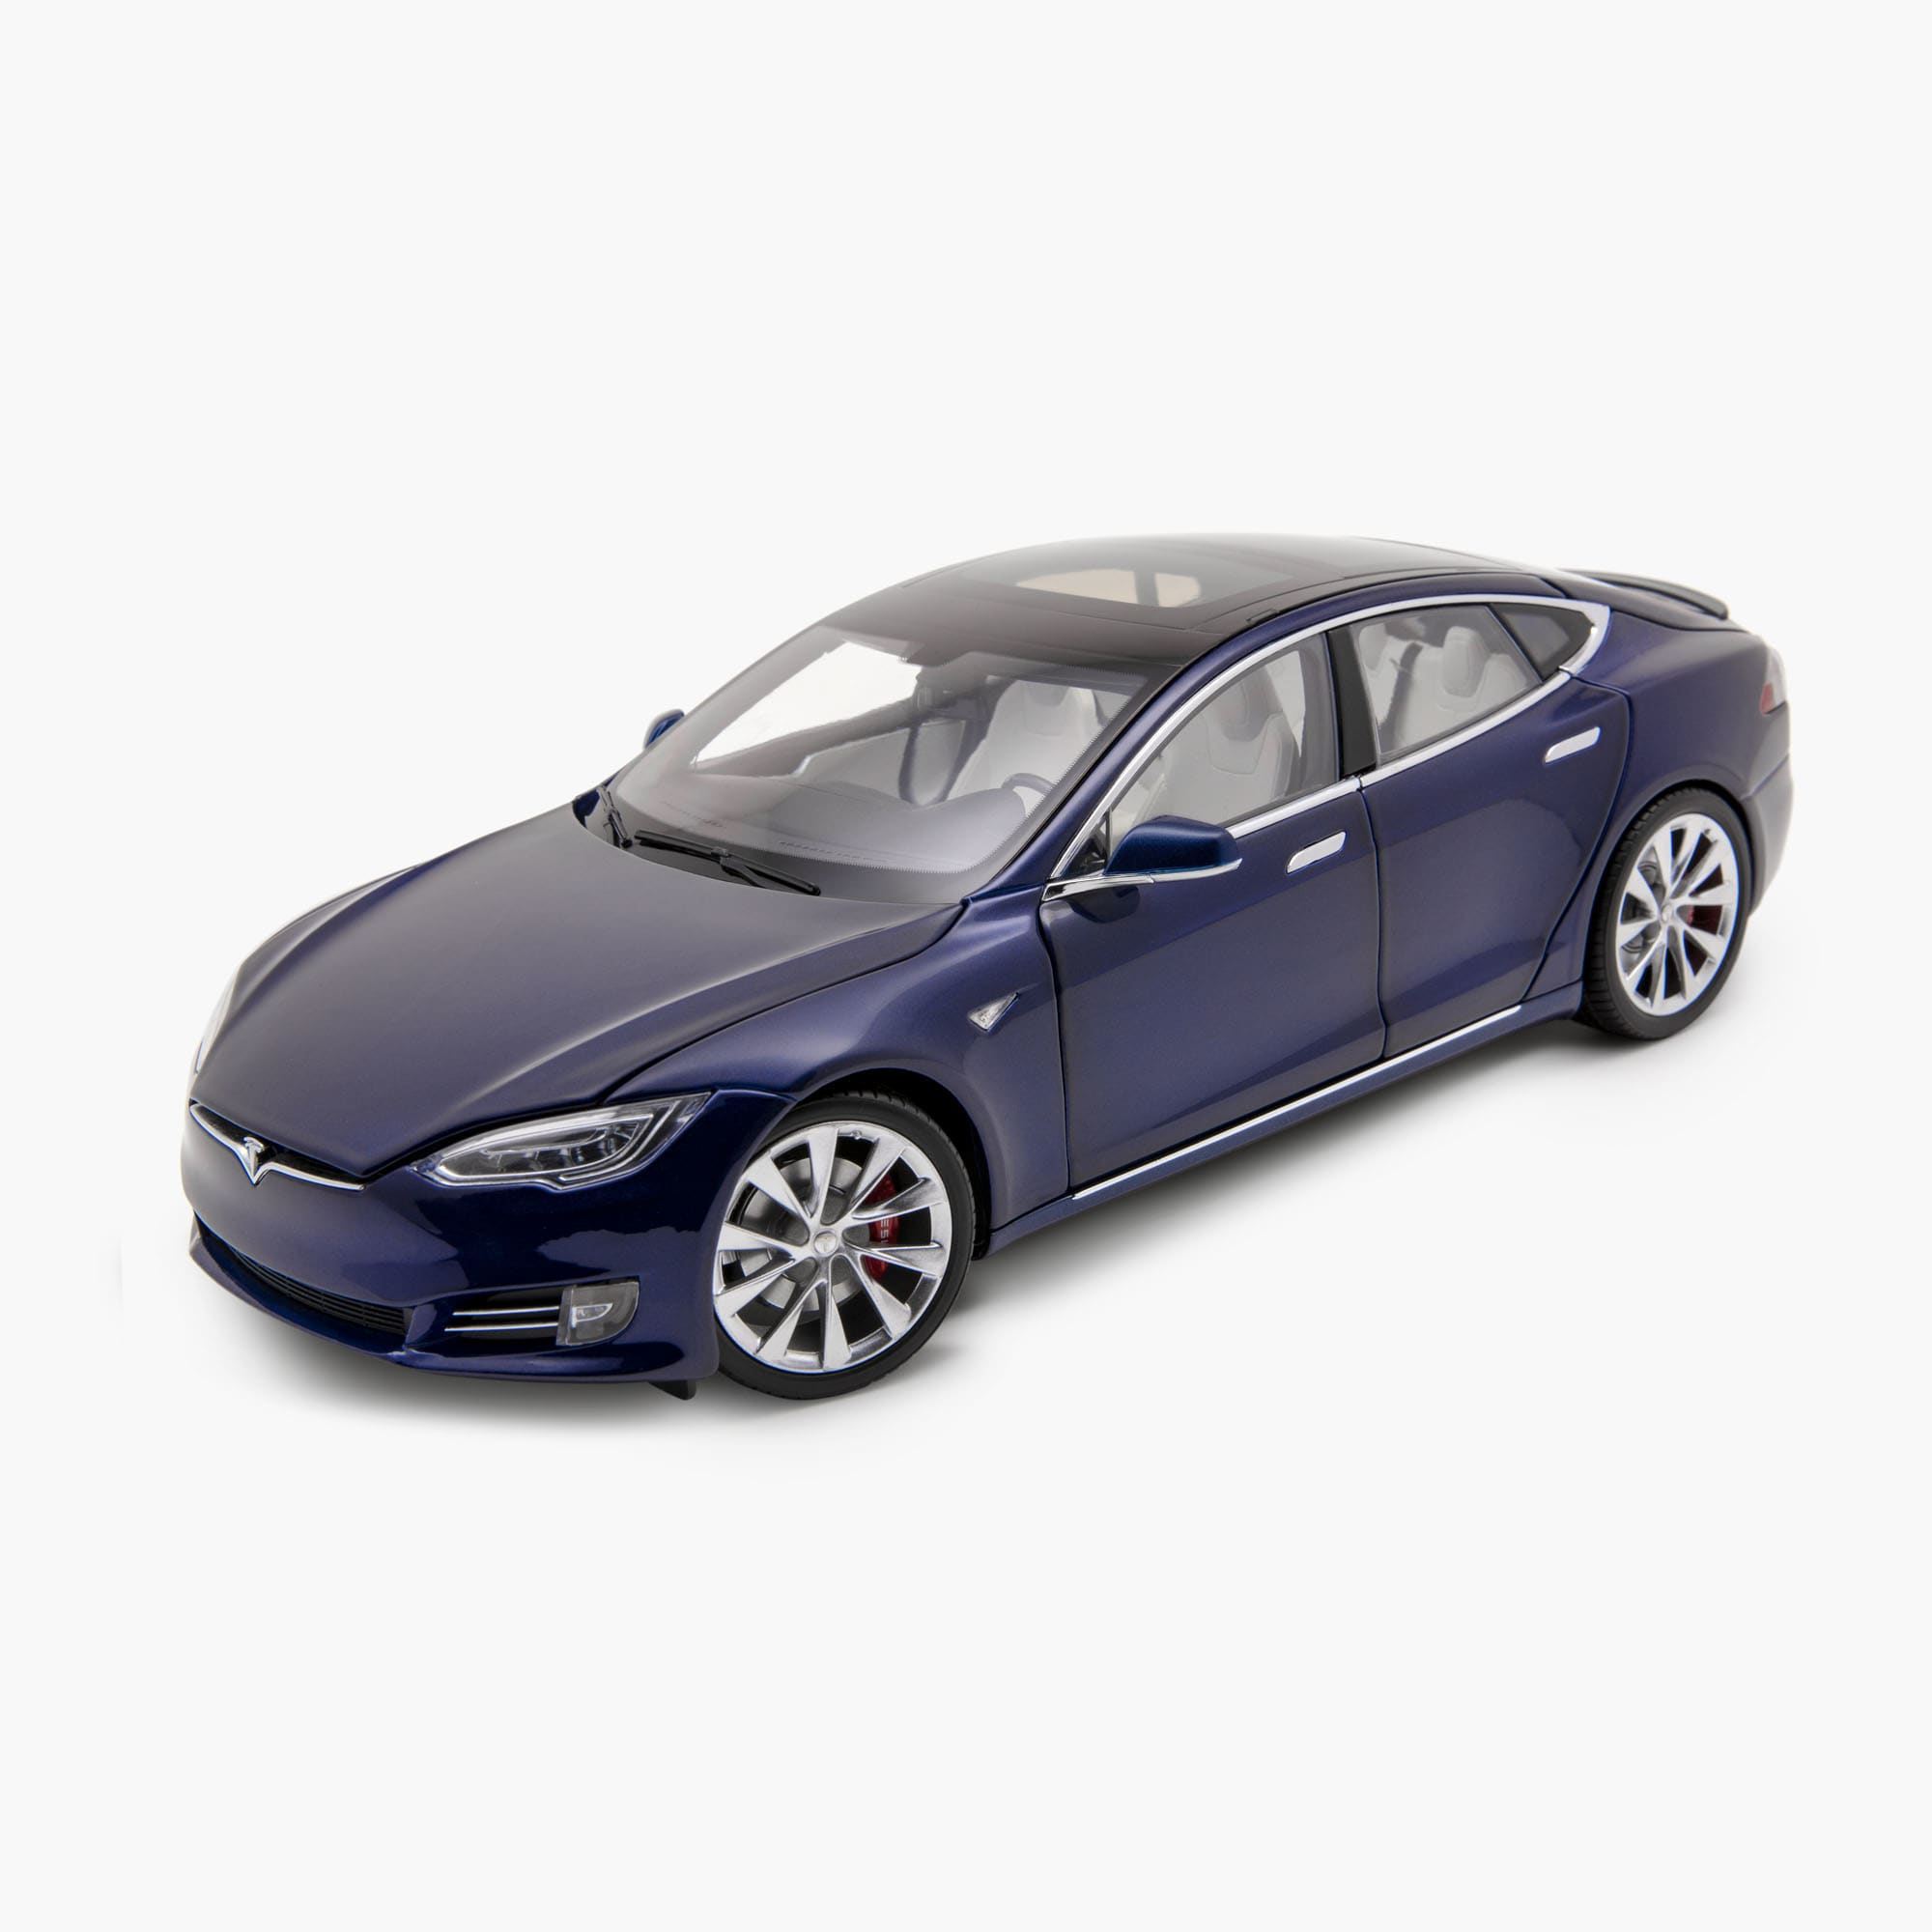 Maqueta de metal fundido a escala 1:18 del Model S